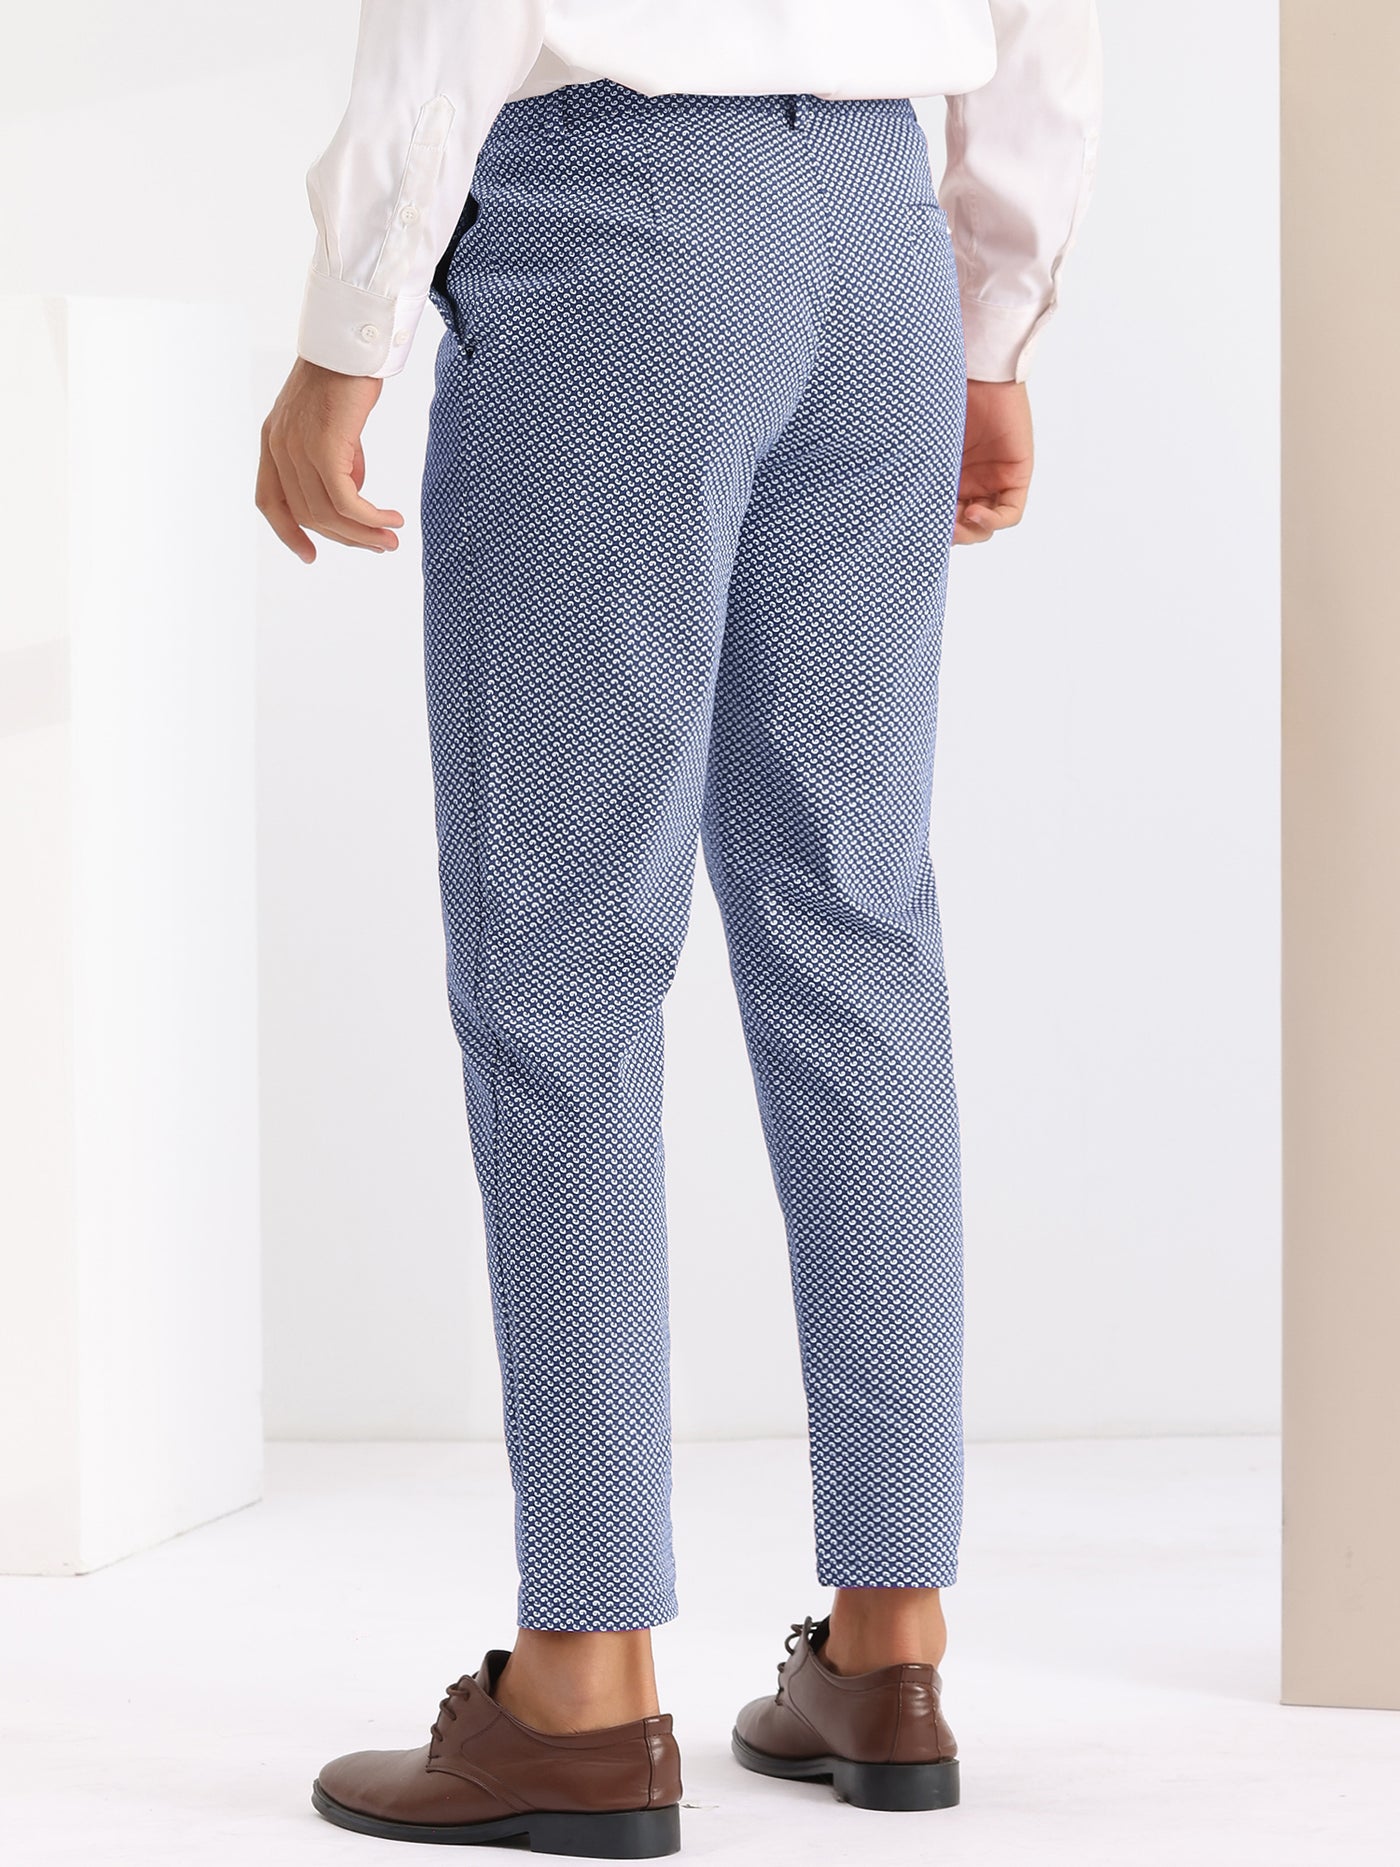 Bublédon Dots Pattern Printed Dress Pants for Men's Slim Fit Flat Front Trouser